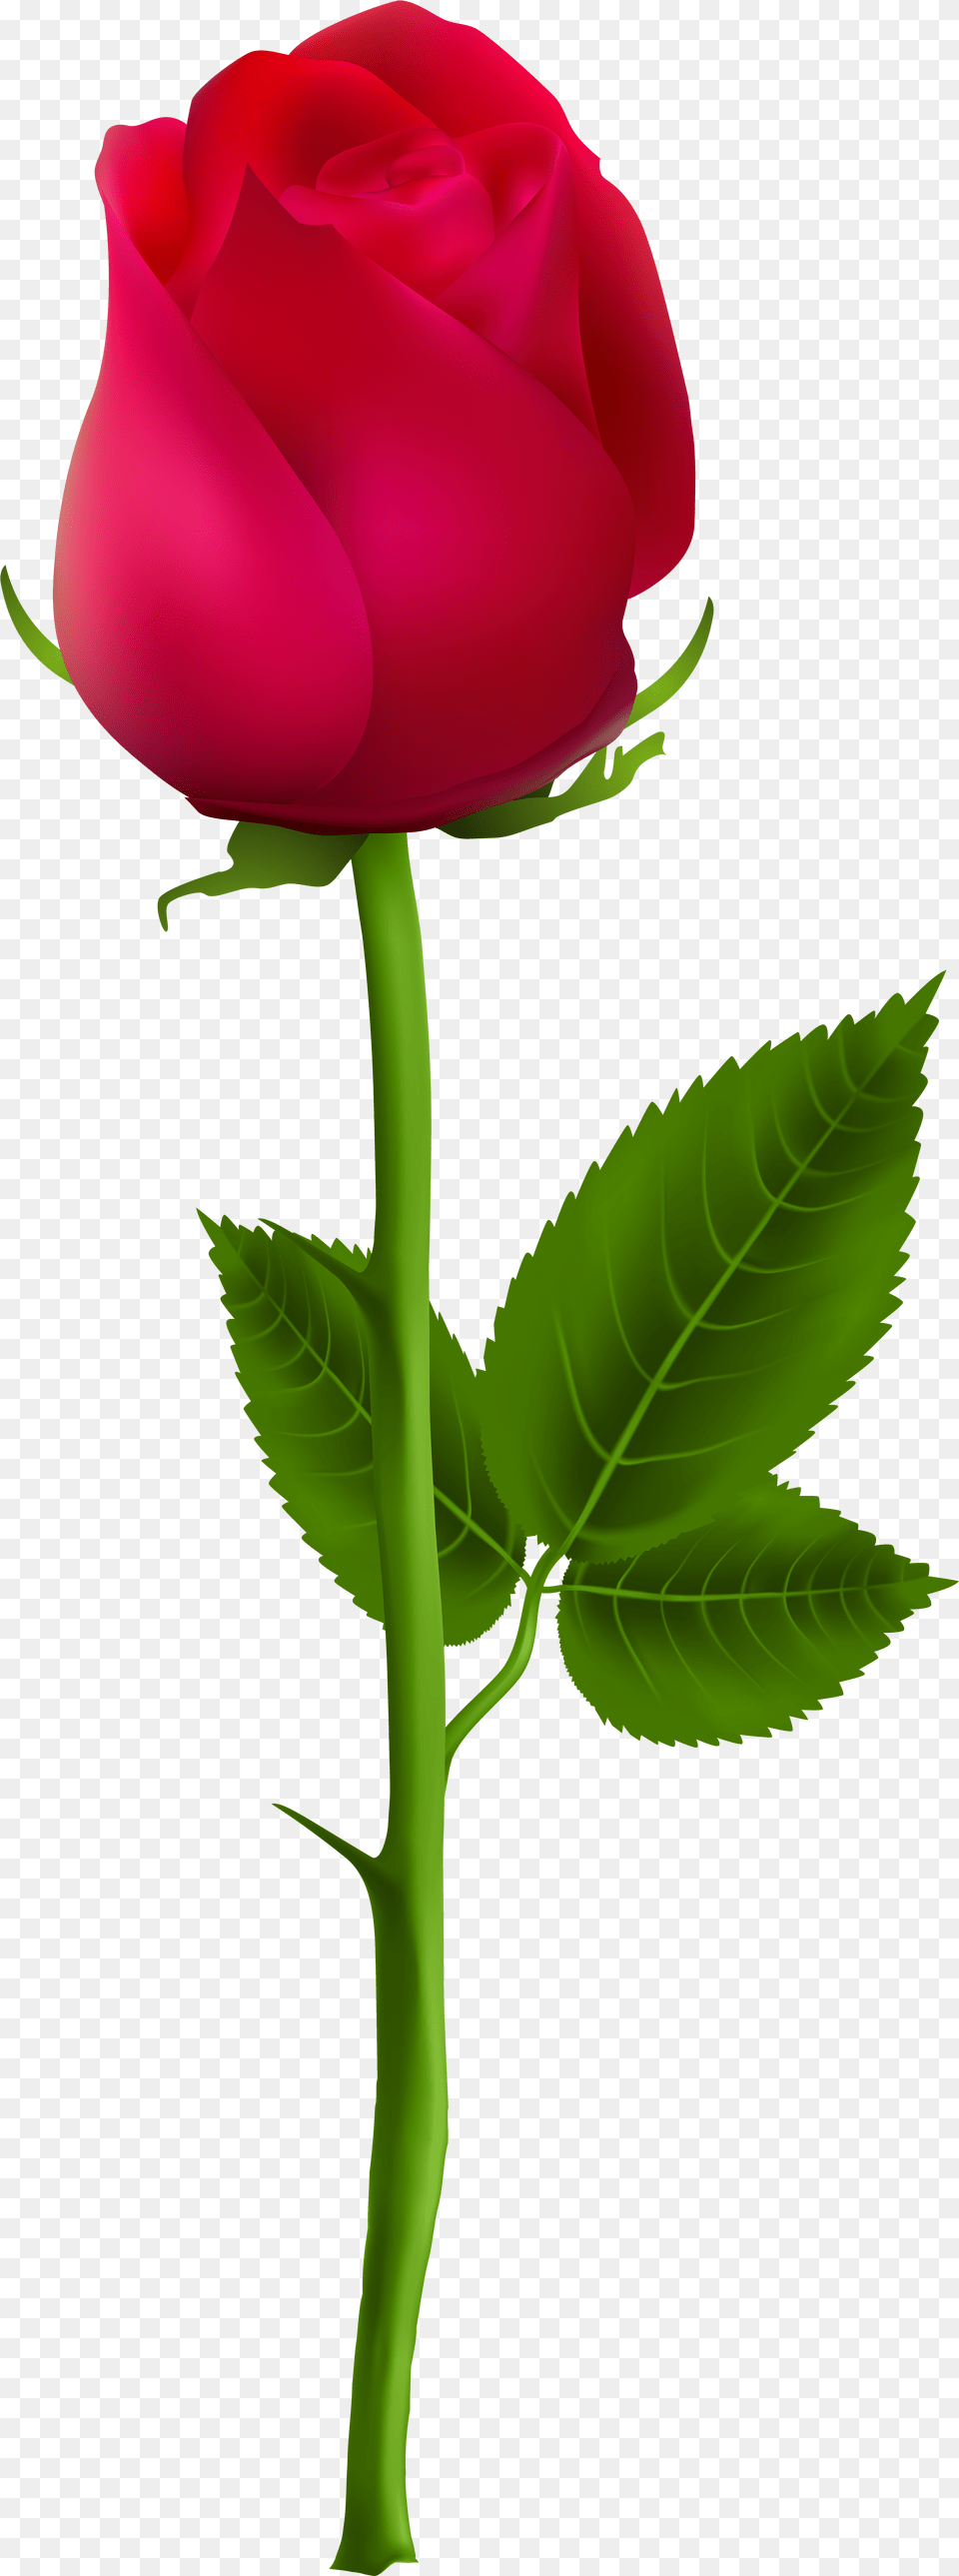 Rose Stem Graphic Beautiful Rose Single Flower, Plant Png Image